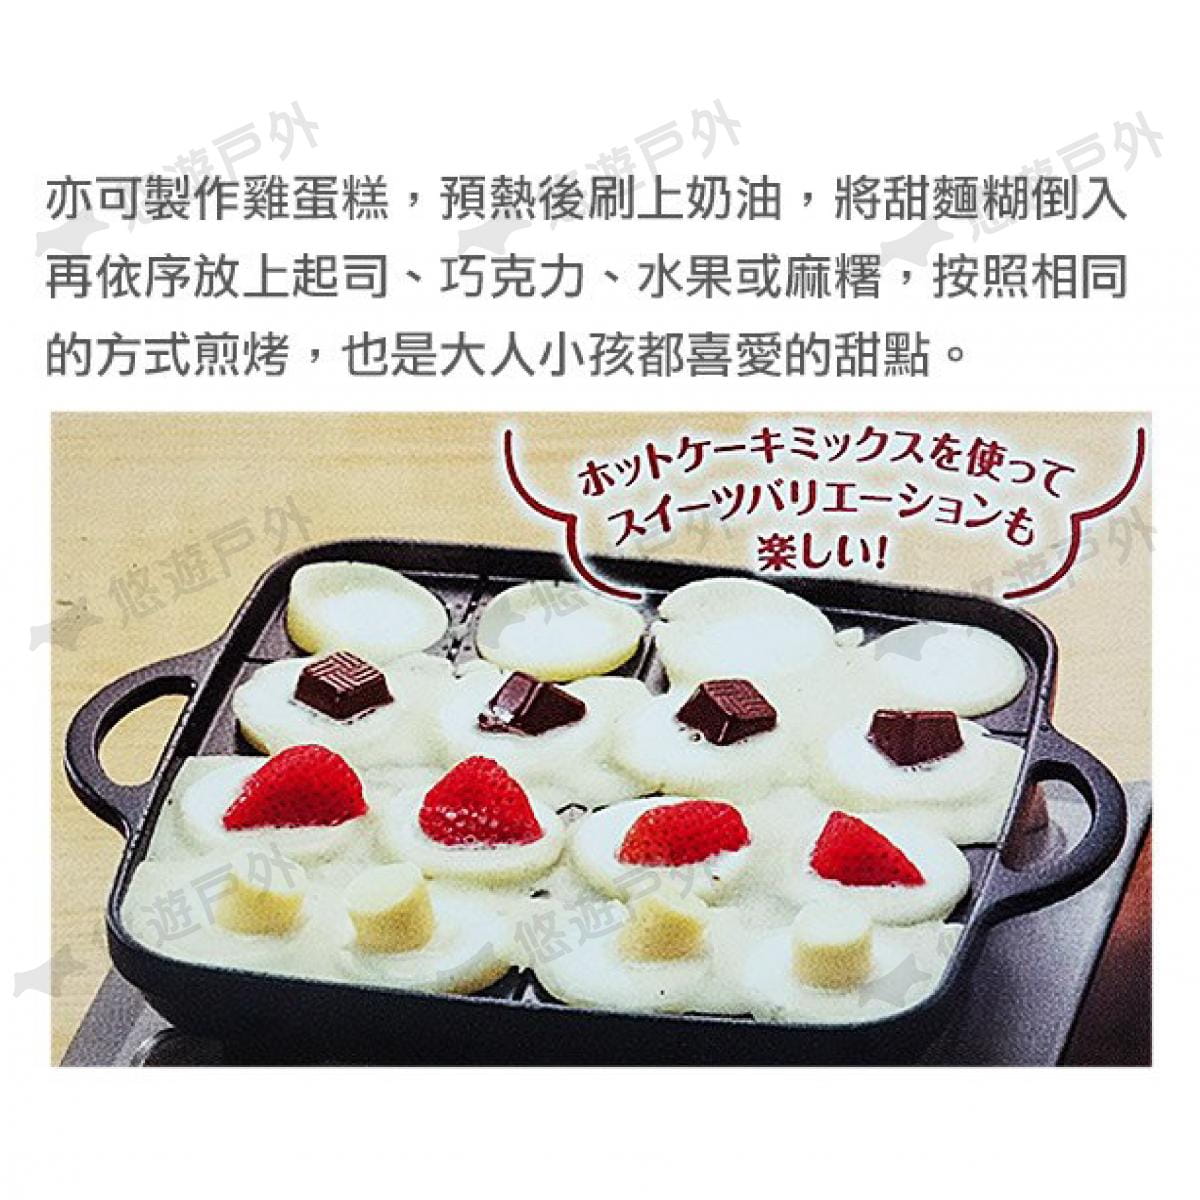 【Iwatani 岩谷】卡式瓦斯爐專用不沾章魚燒烤盤 CB-A-TKP (悠遊戶外) 5